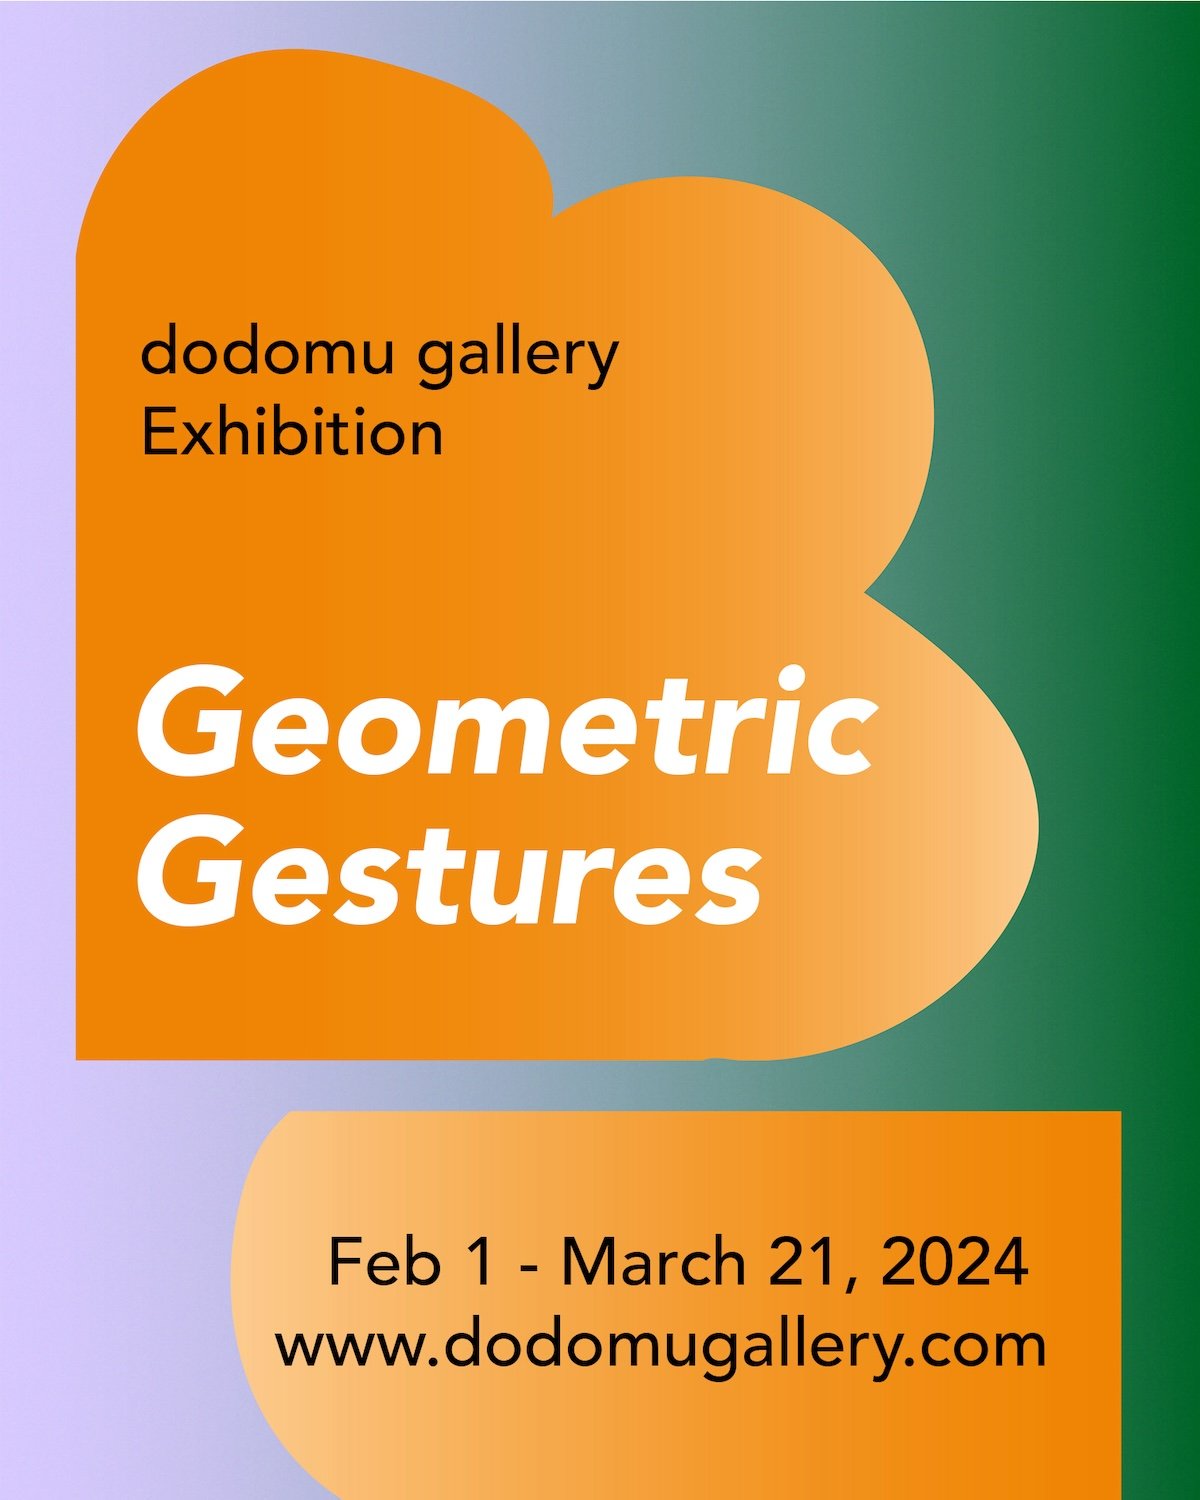 Geometric Gestures at dodomu gallery